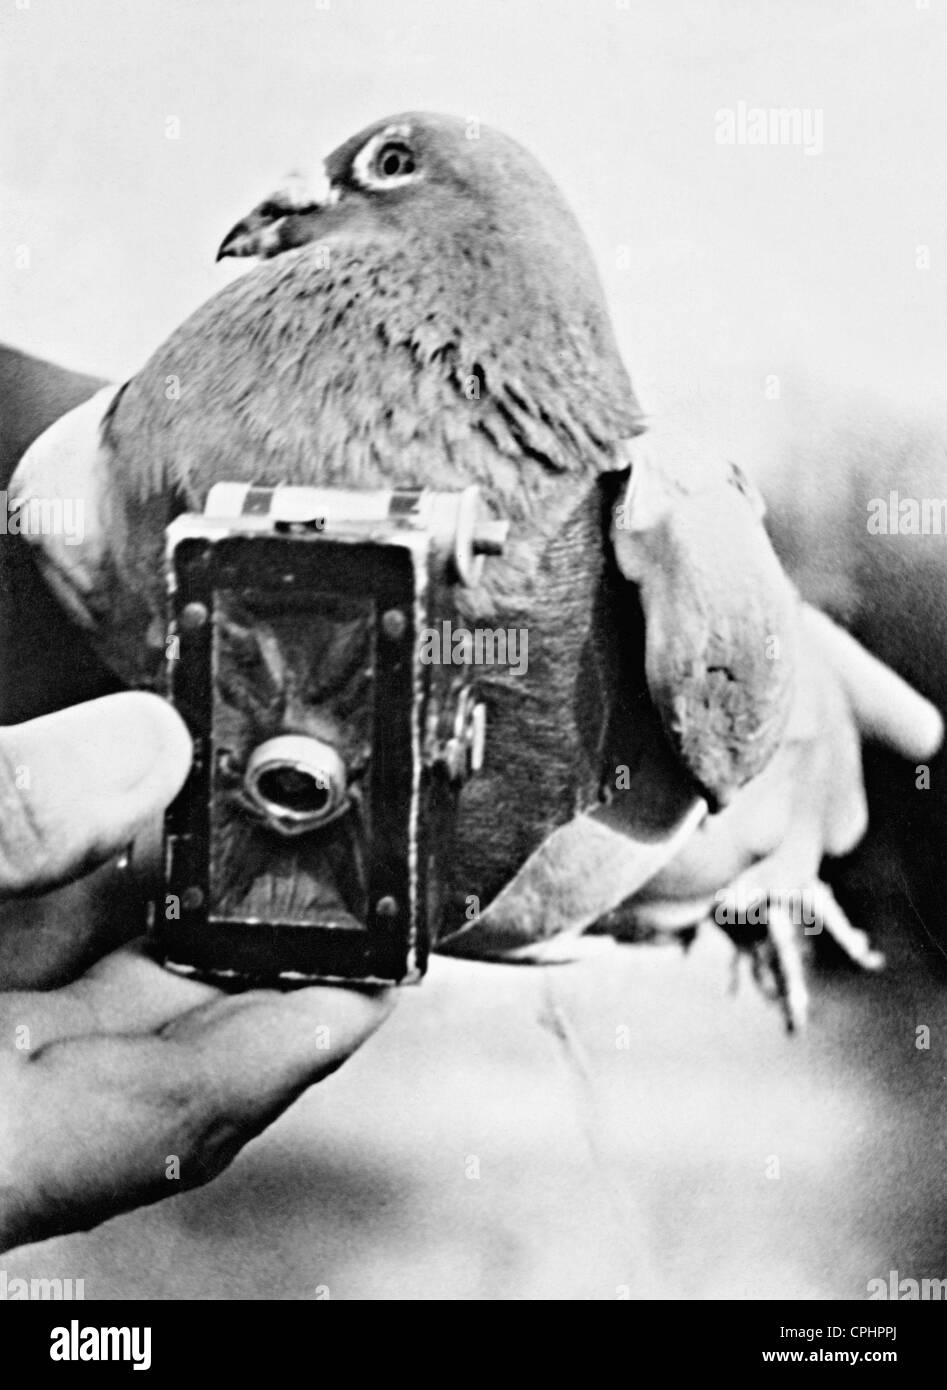 Palomas mensajeras equipadas con camara fotografías e imágenes de alta  resolución - Alamy